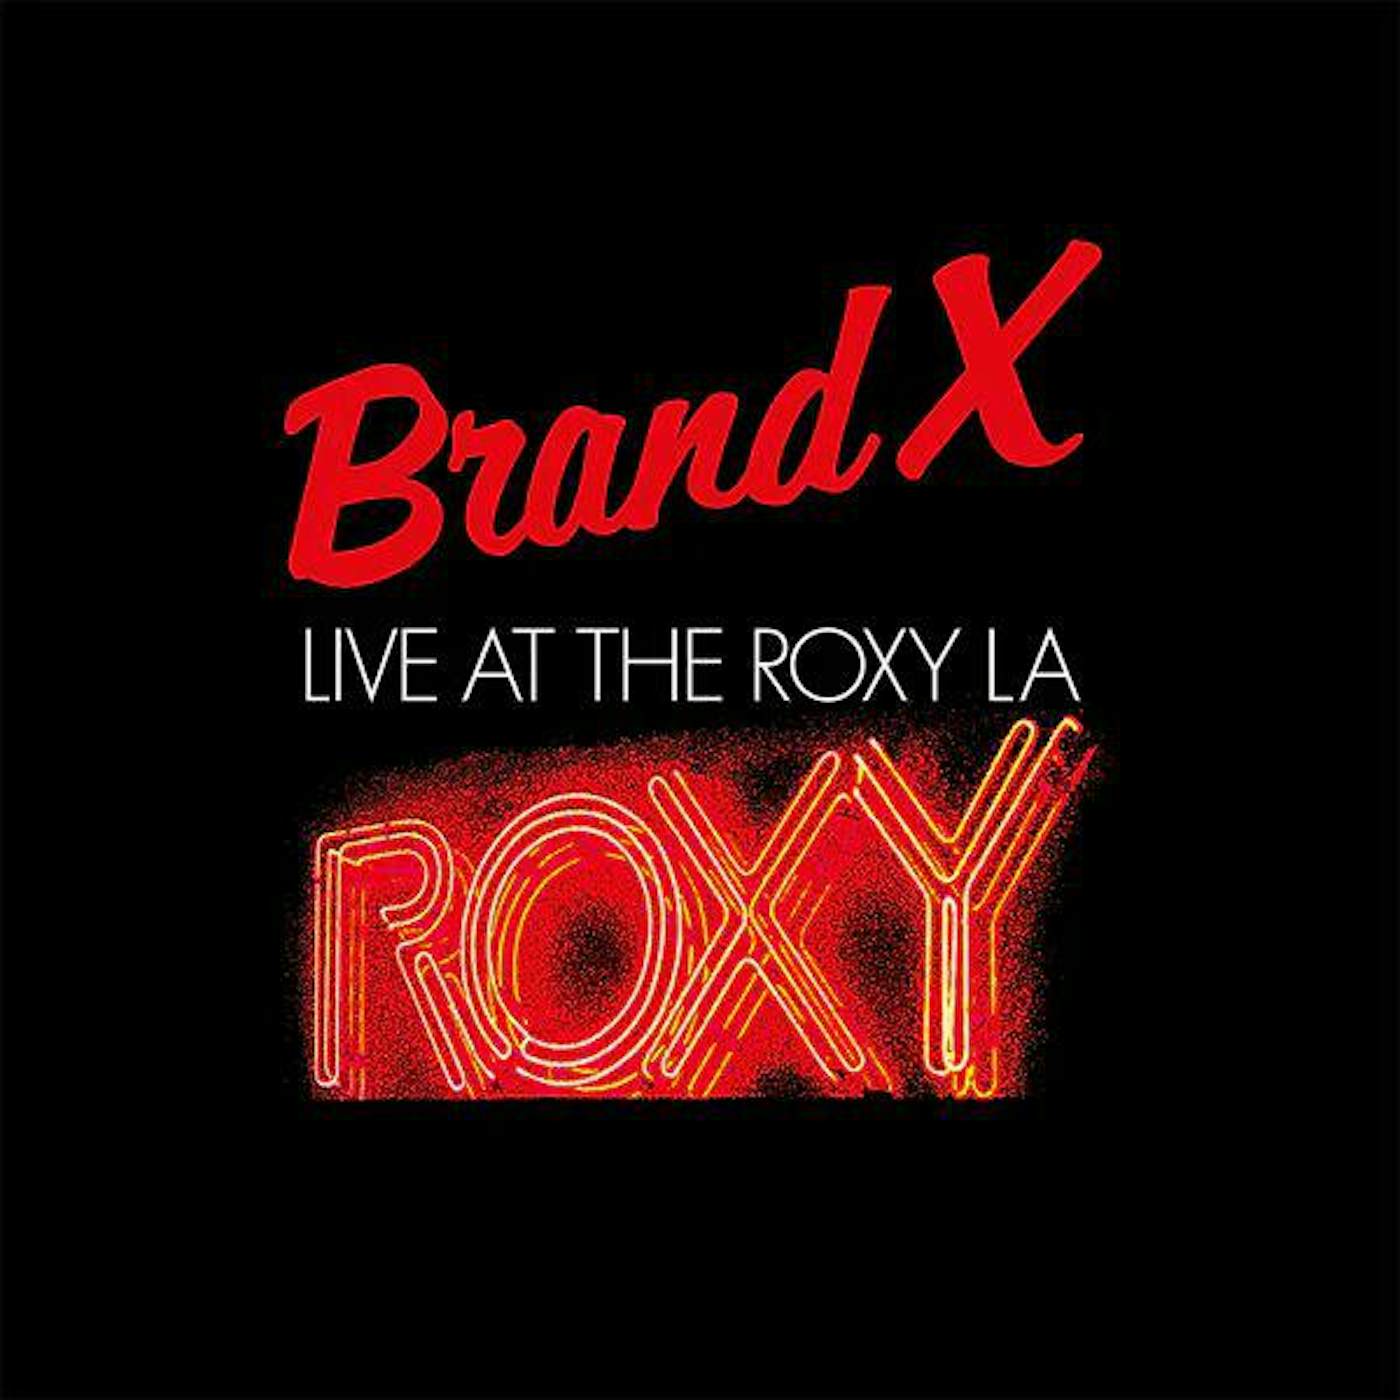 Brand X Live At The Roxy L.A. 1979 (2lp) Vinyl Record